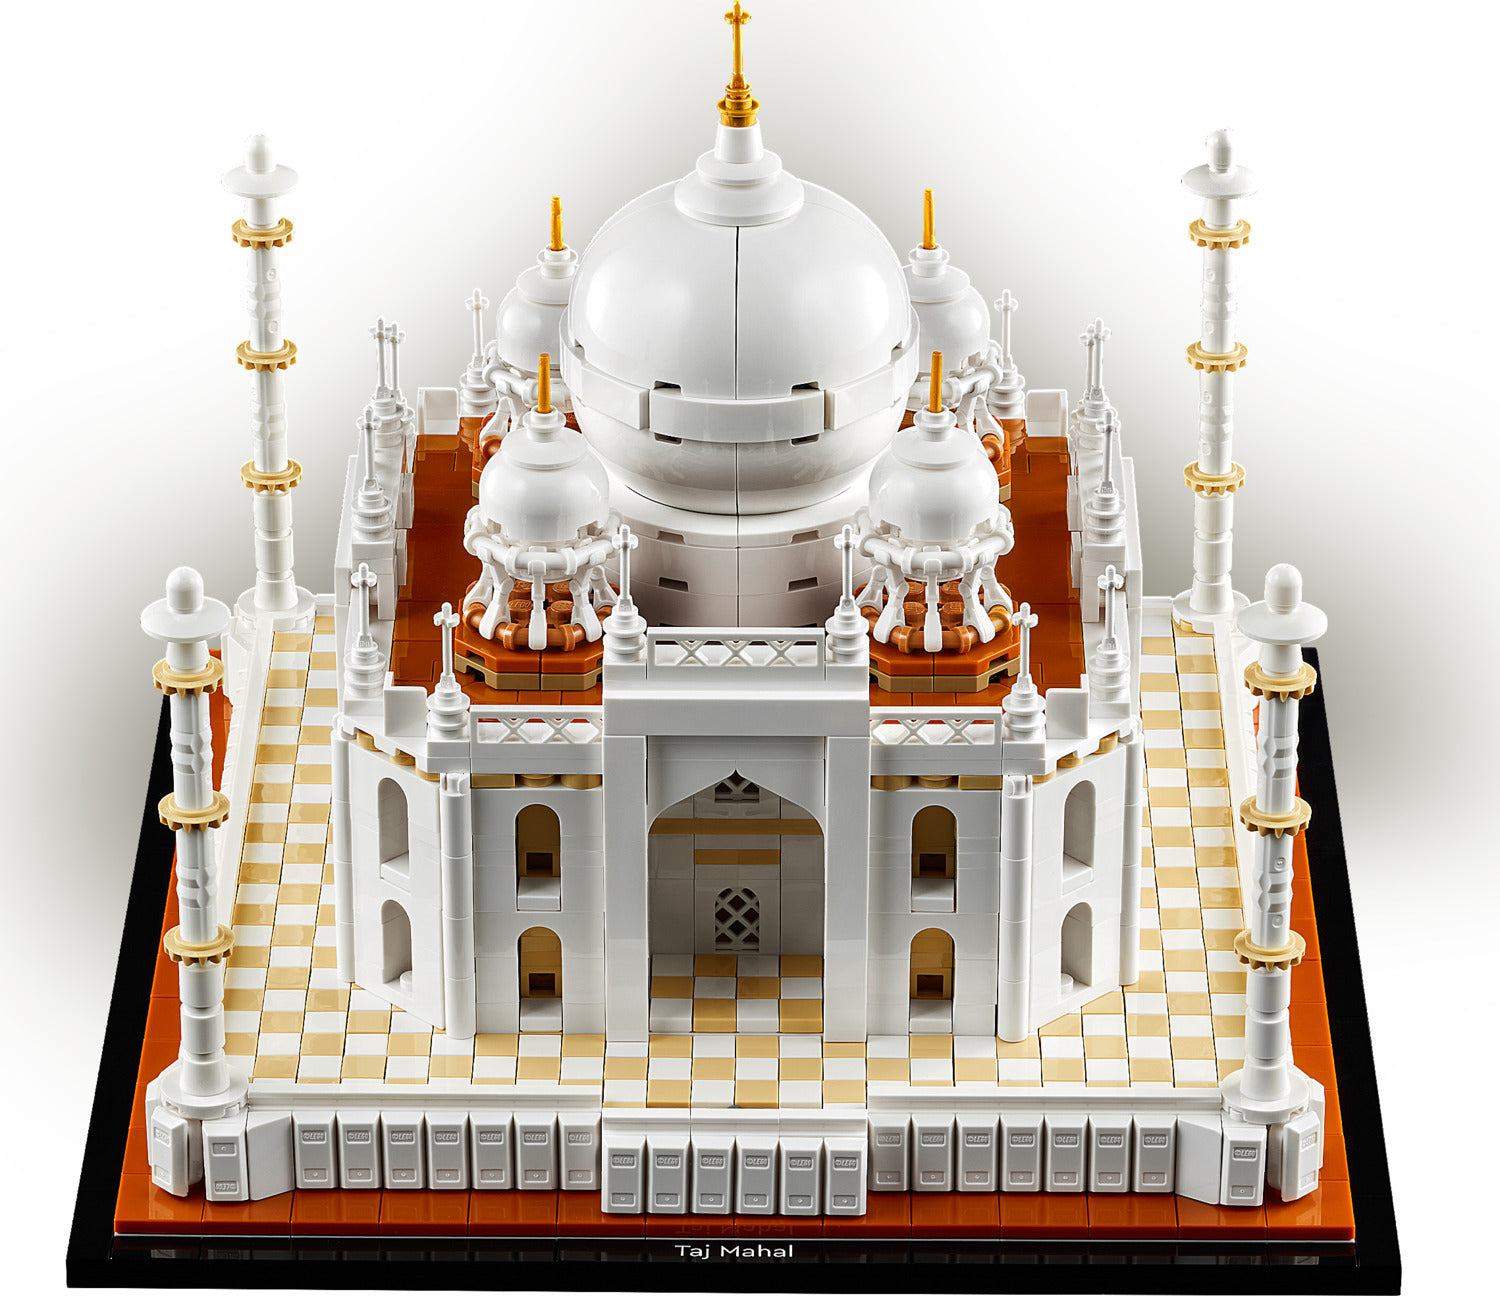 LEGO® Architecture: Taj Mahal